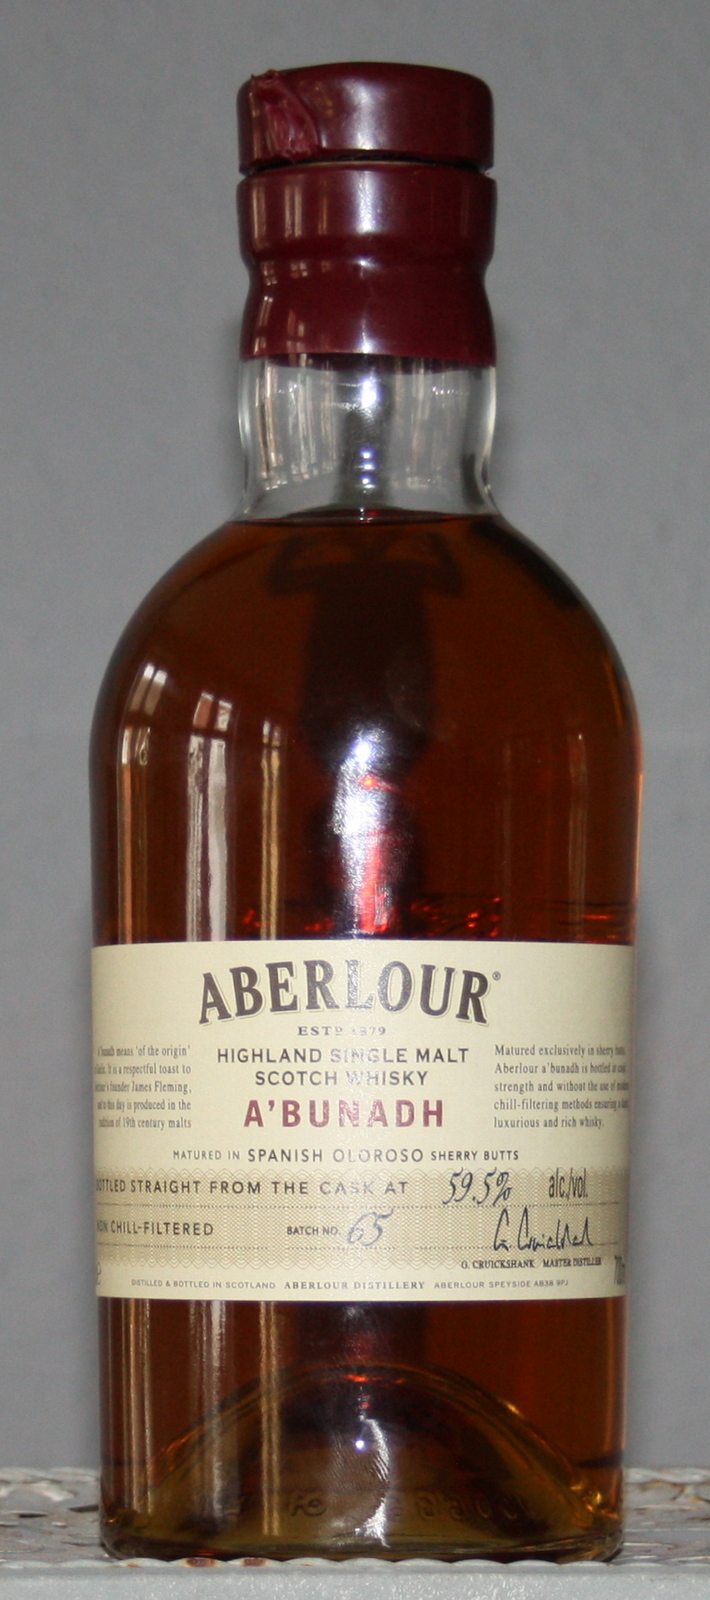 Aberlour